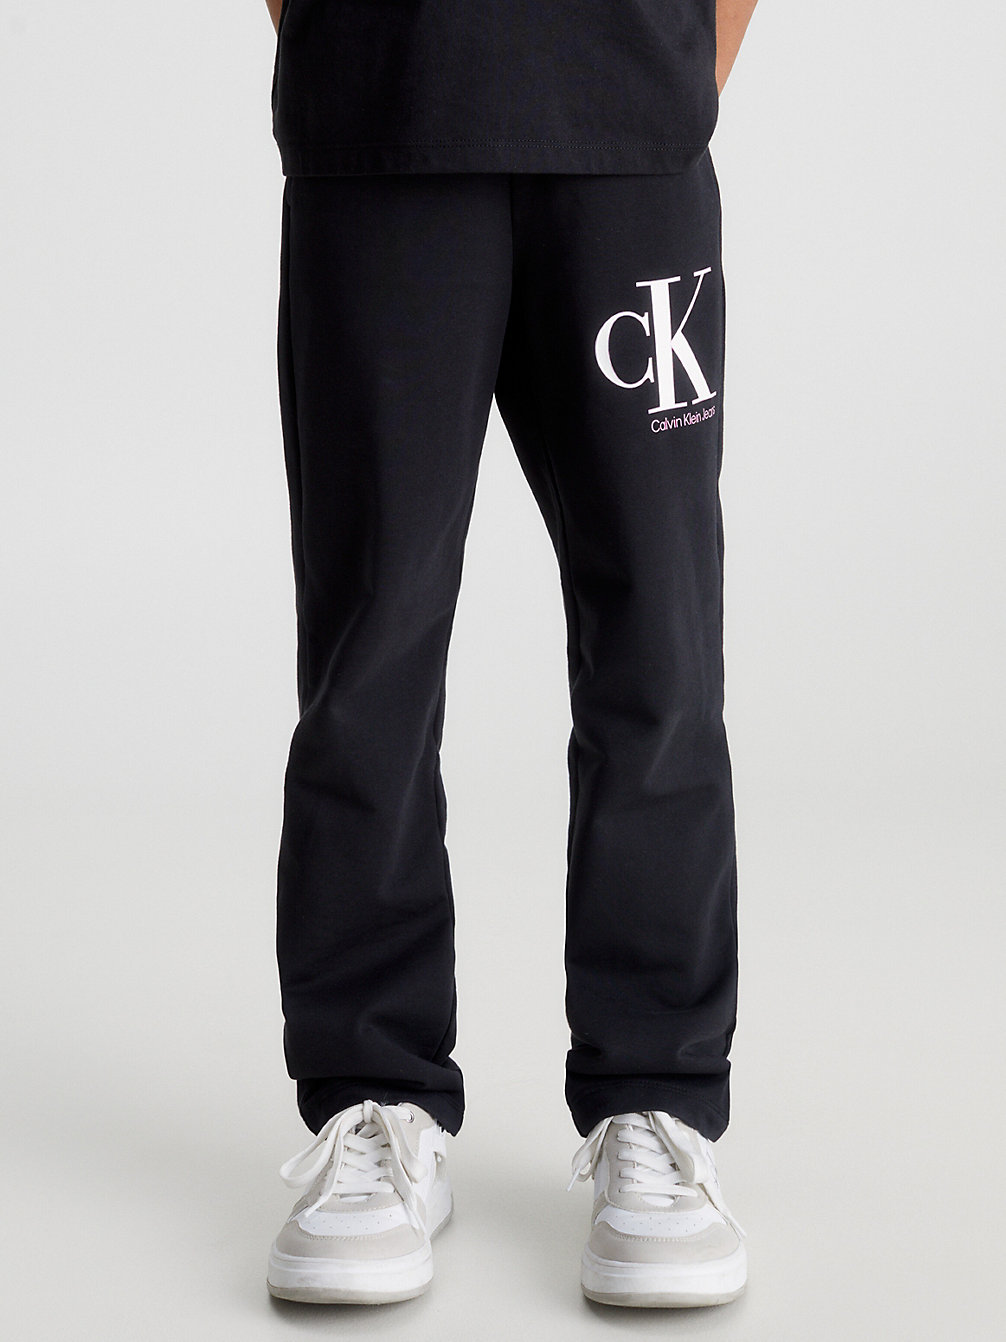 CK BLACK Pantalon De Jogging Avec Logo undefined girls Calvin Klein